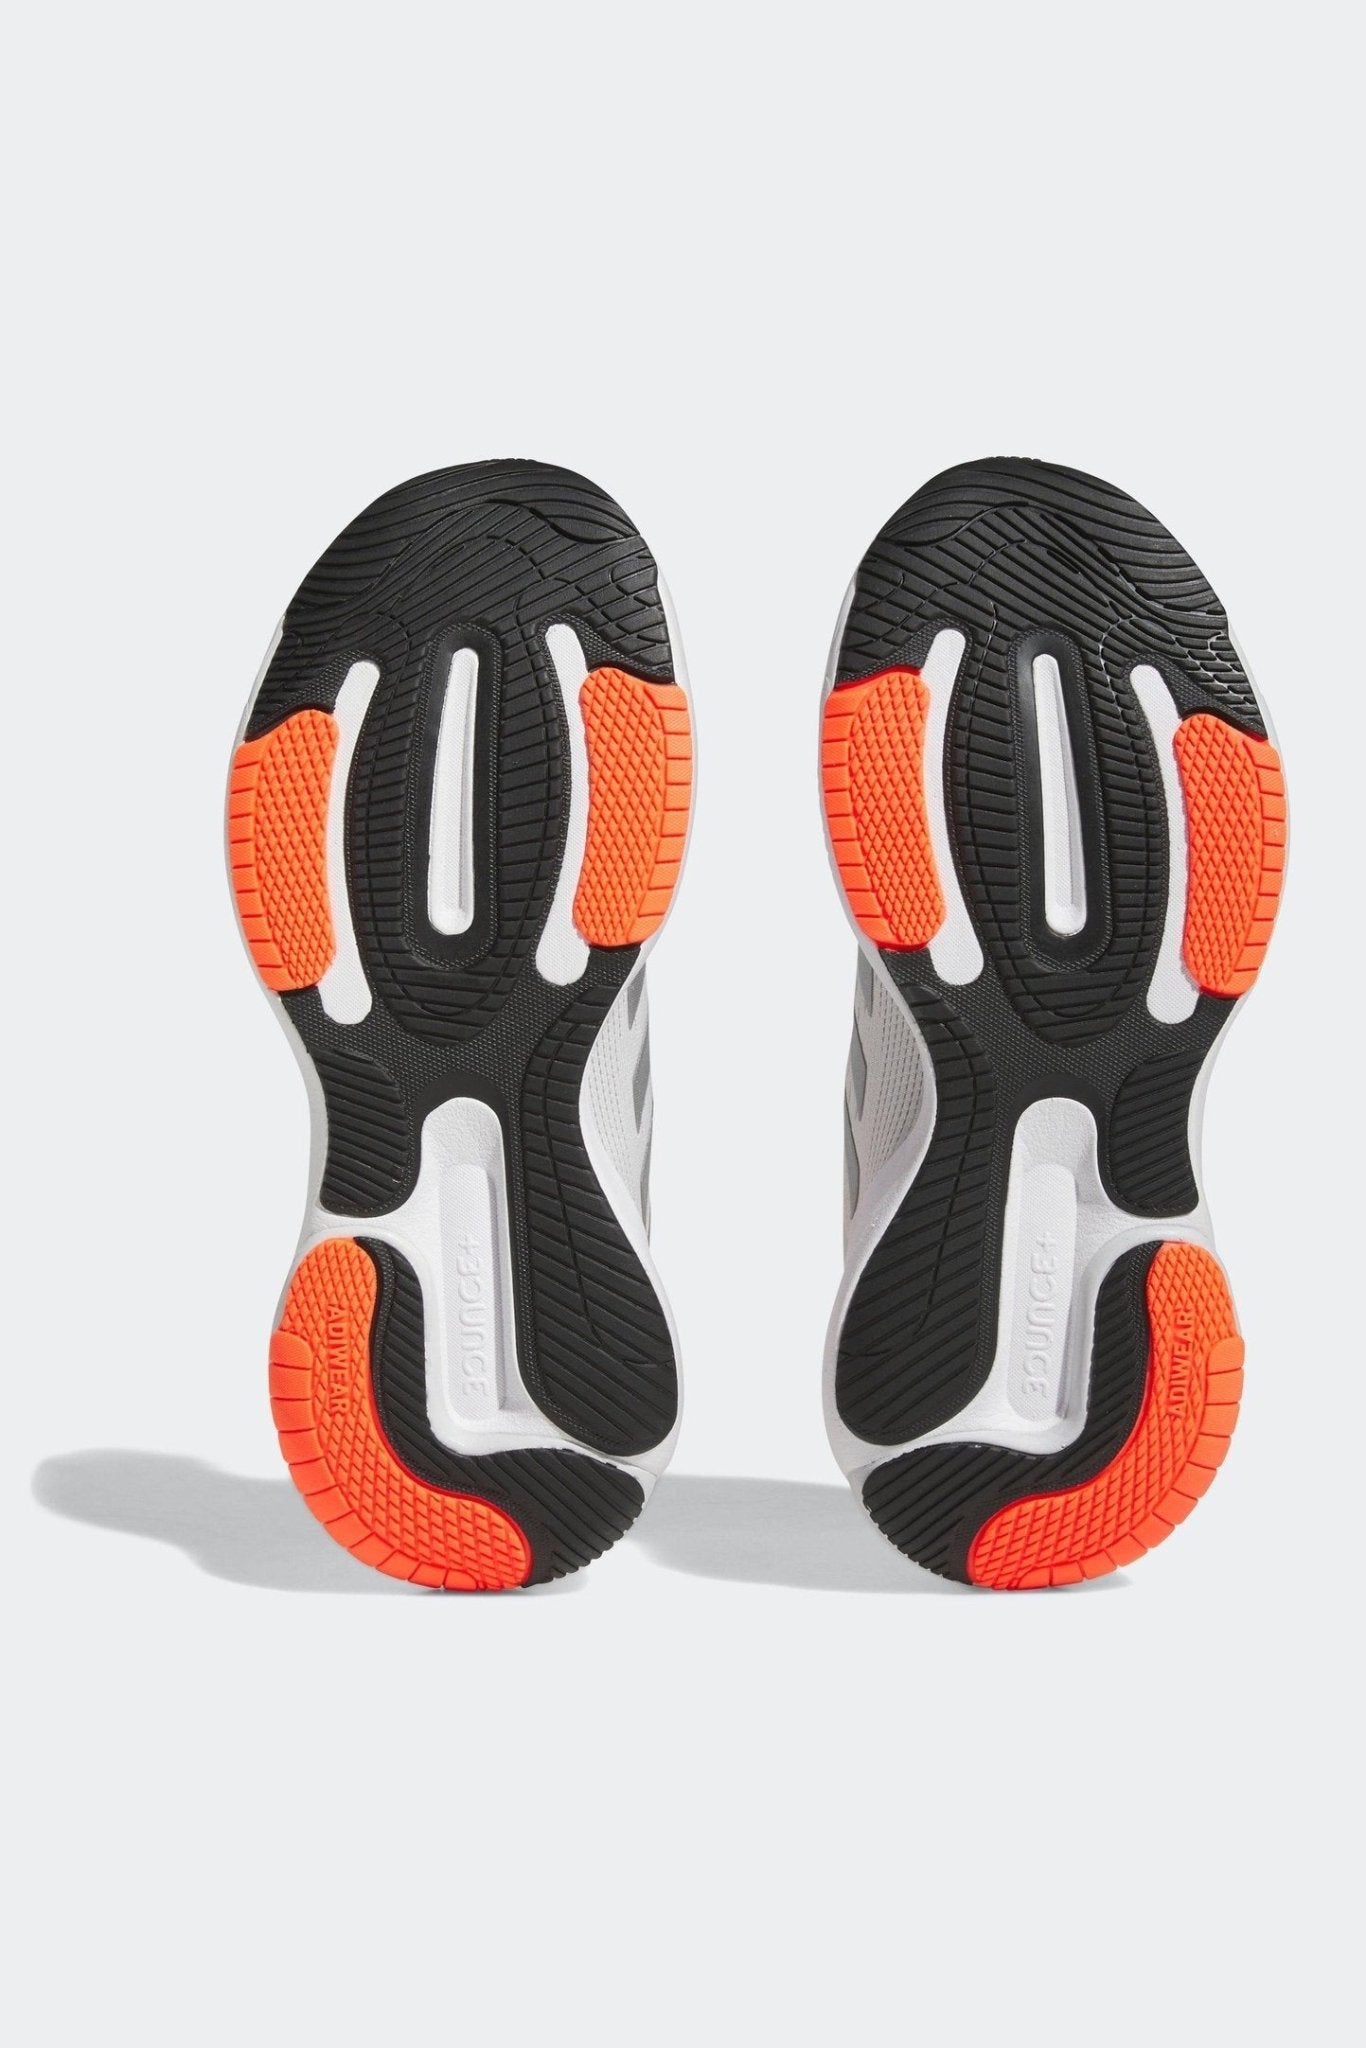 ADIDAS - נעלי ריצה לנשים RESPONSE SUPER 3.0 בצבע אפור כסף - MASHBIR//365